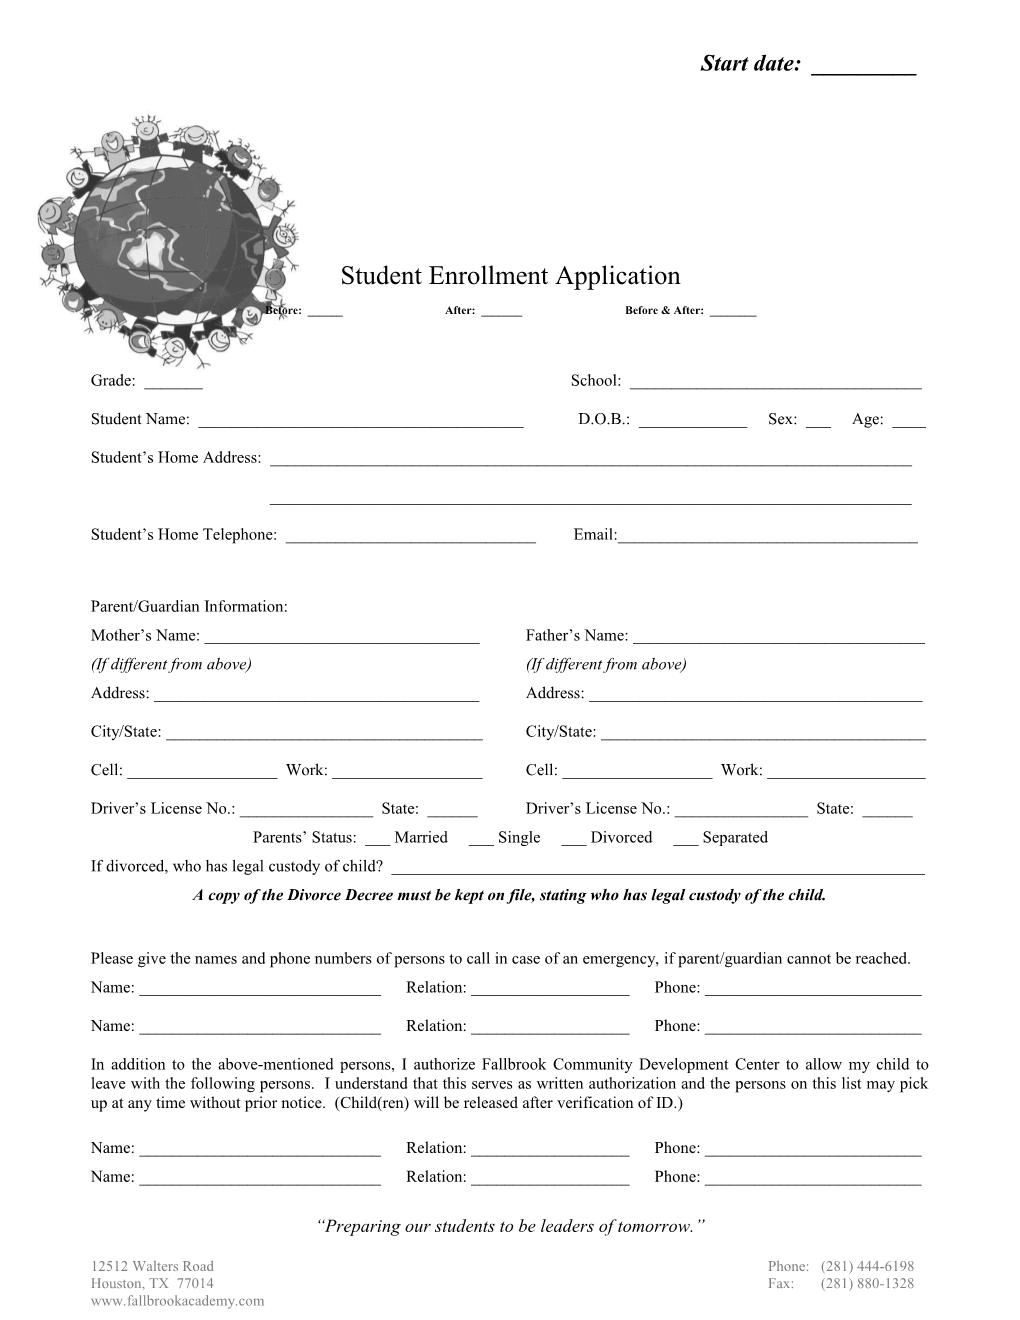 Student Enrollment Application